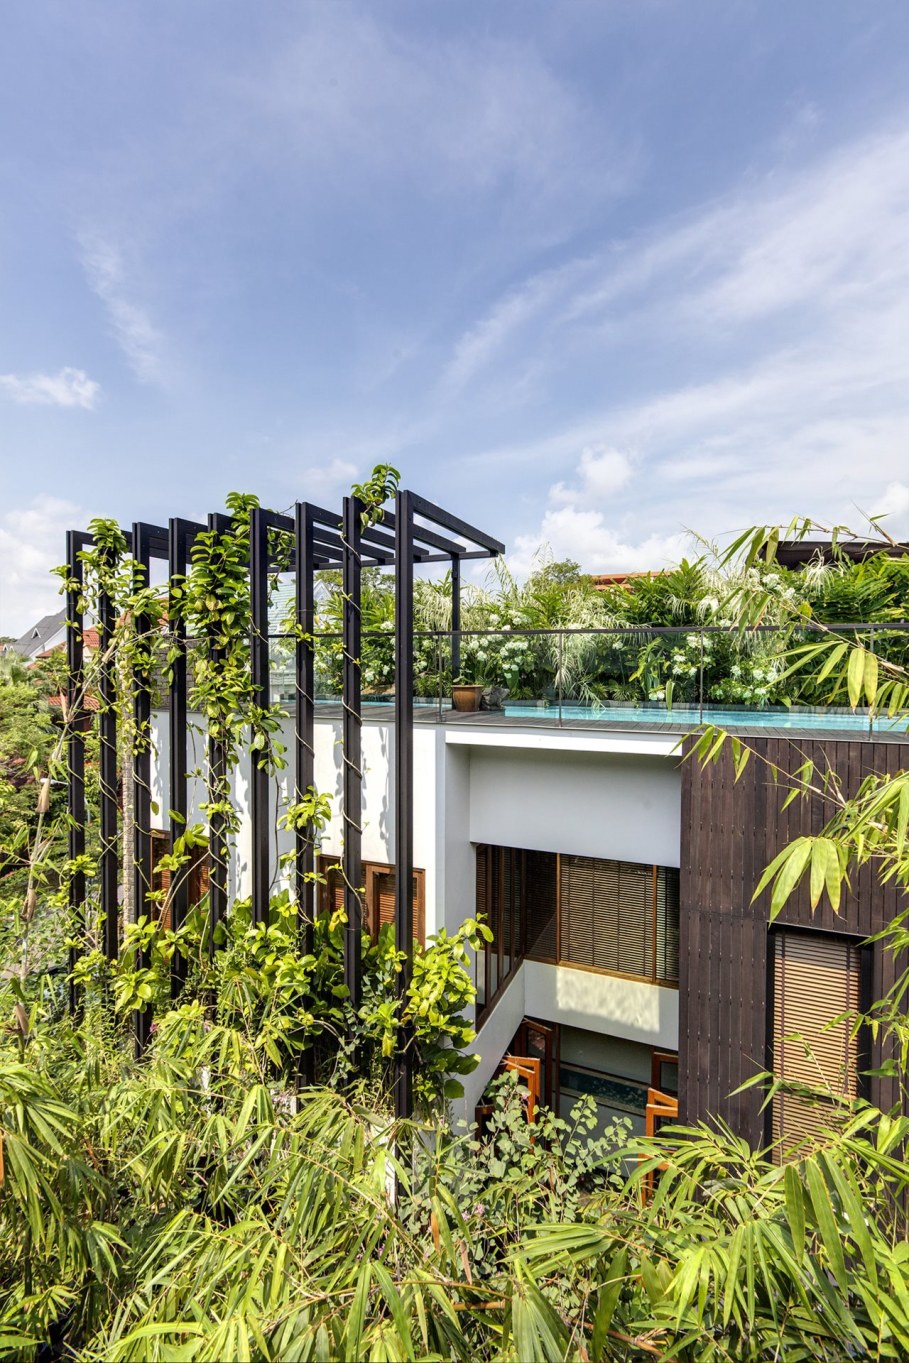 Tan's Garden Villa in Singapore - the outside view